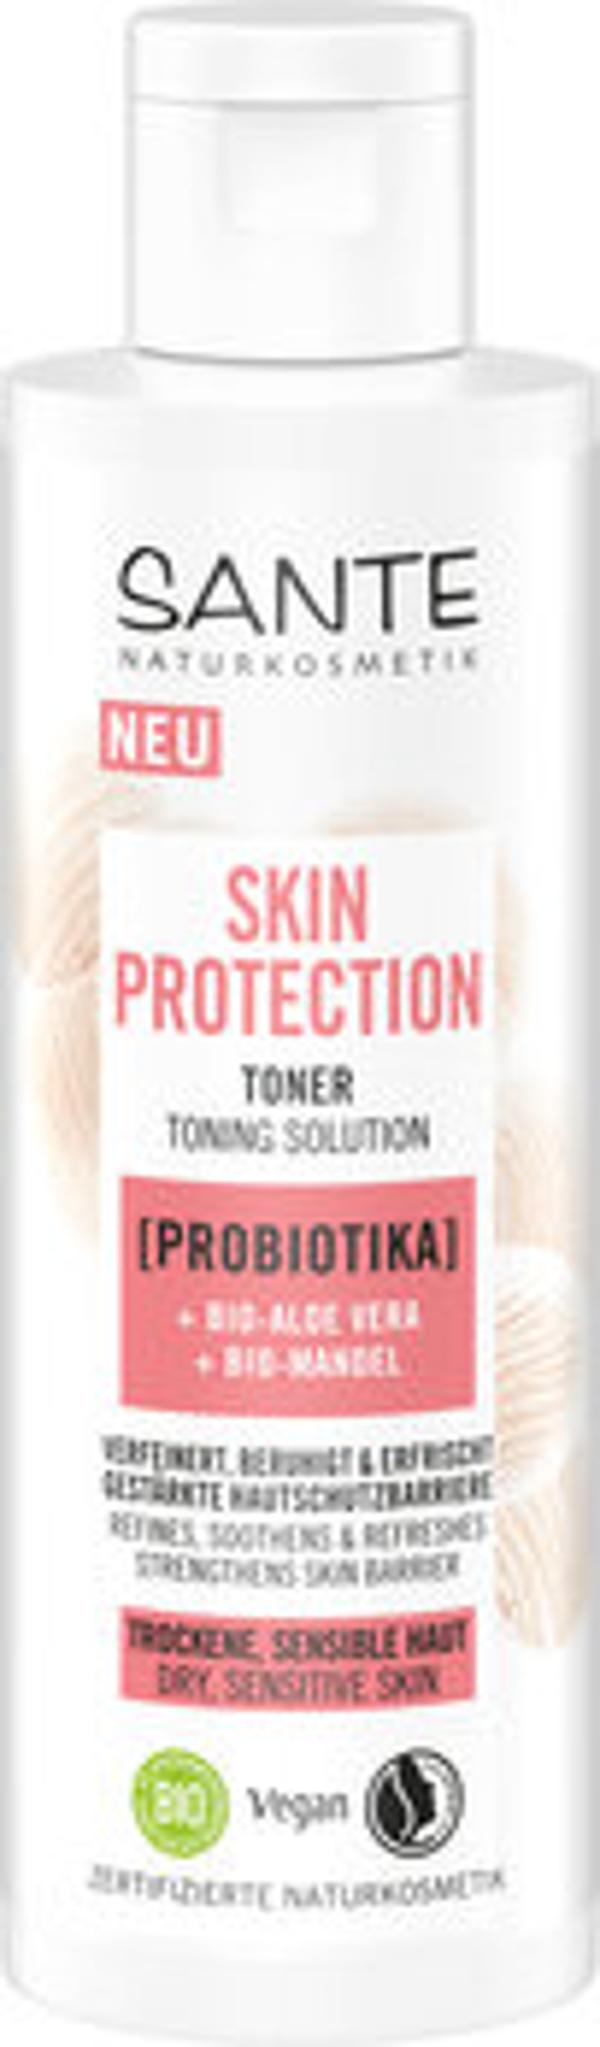 Produktfoto zu Skin Protection Toner Probiotika 125ml